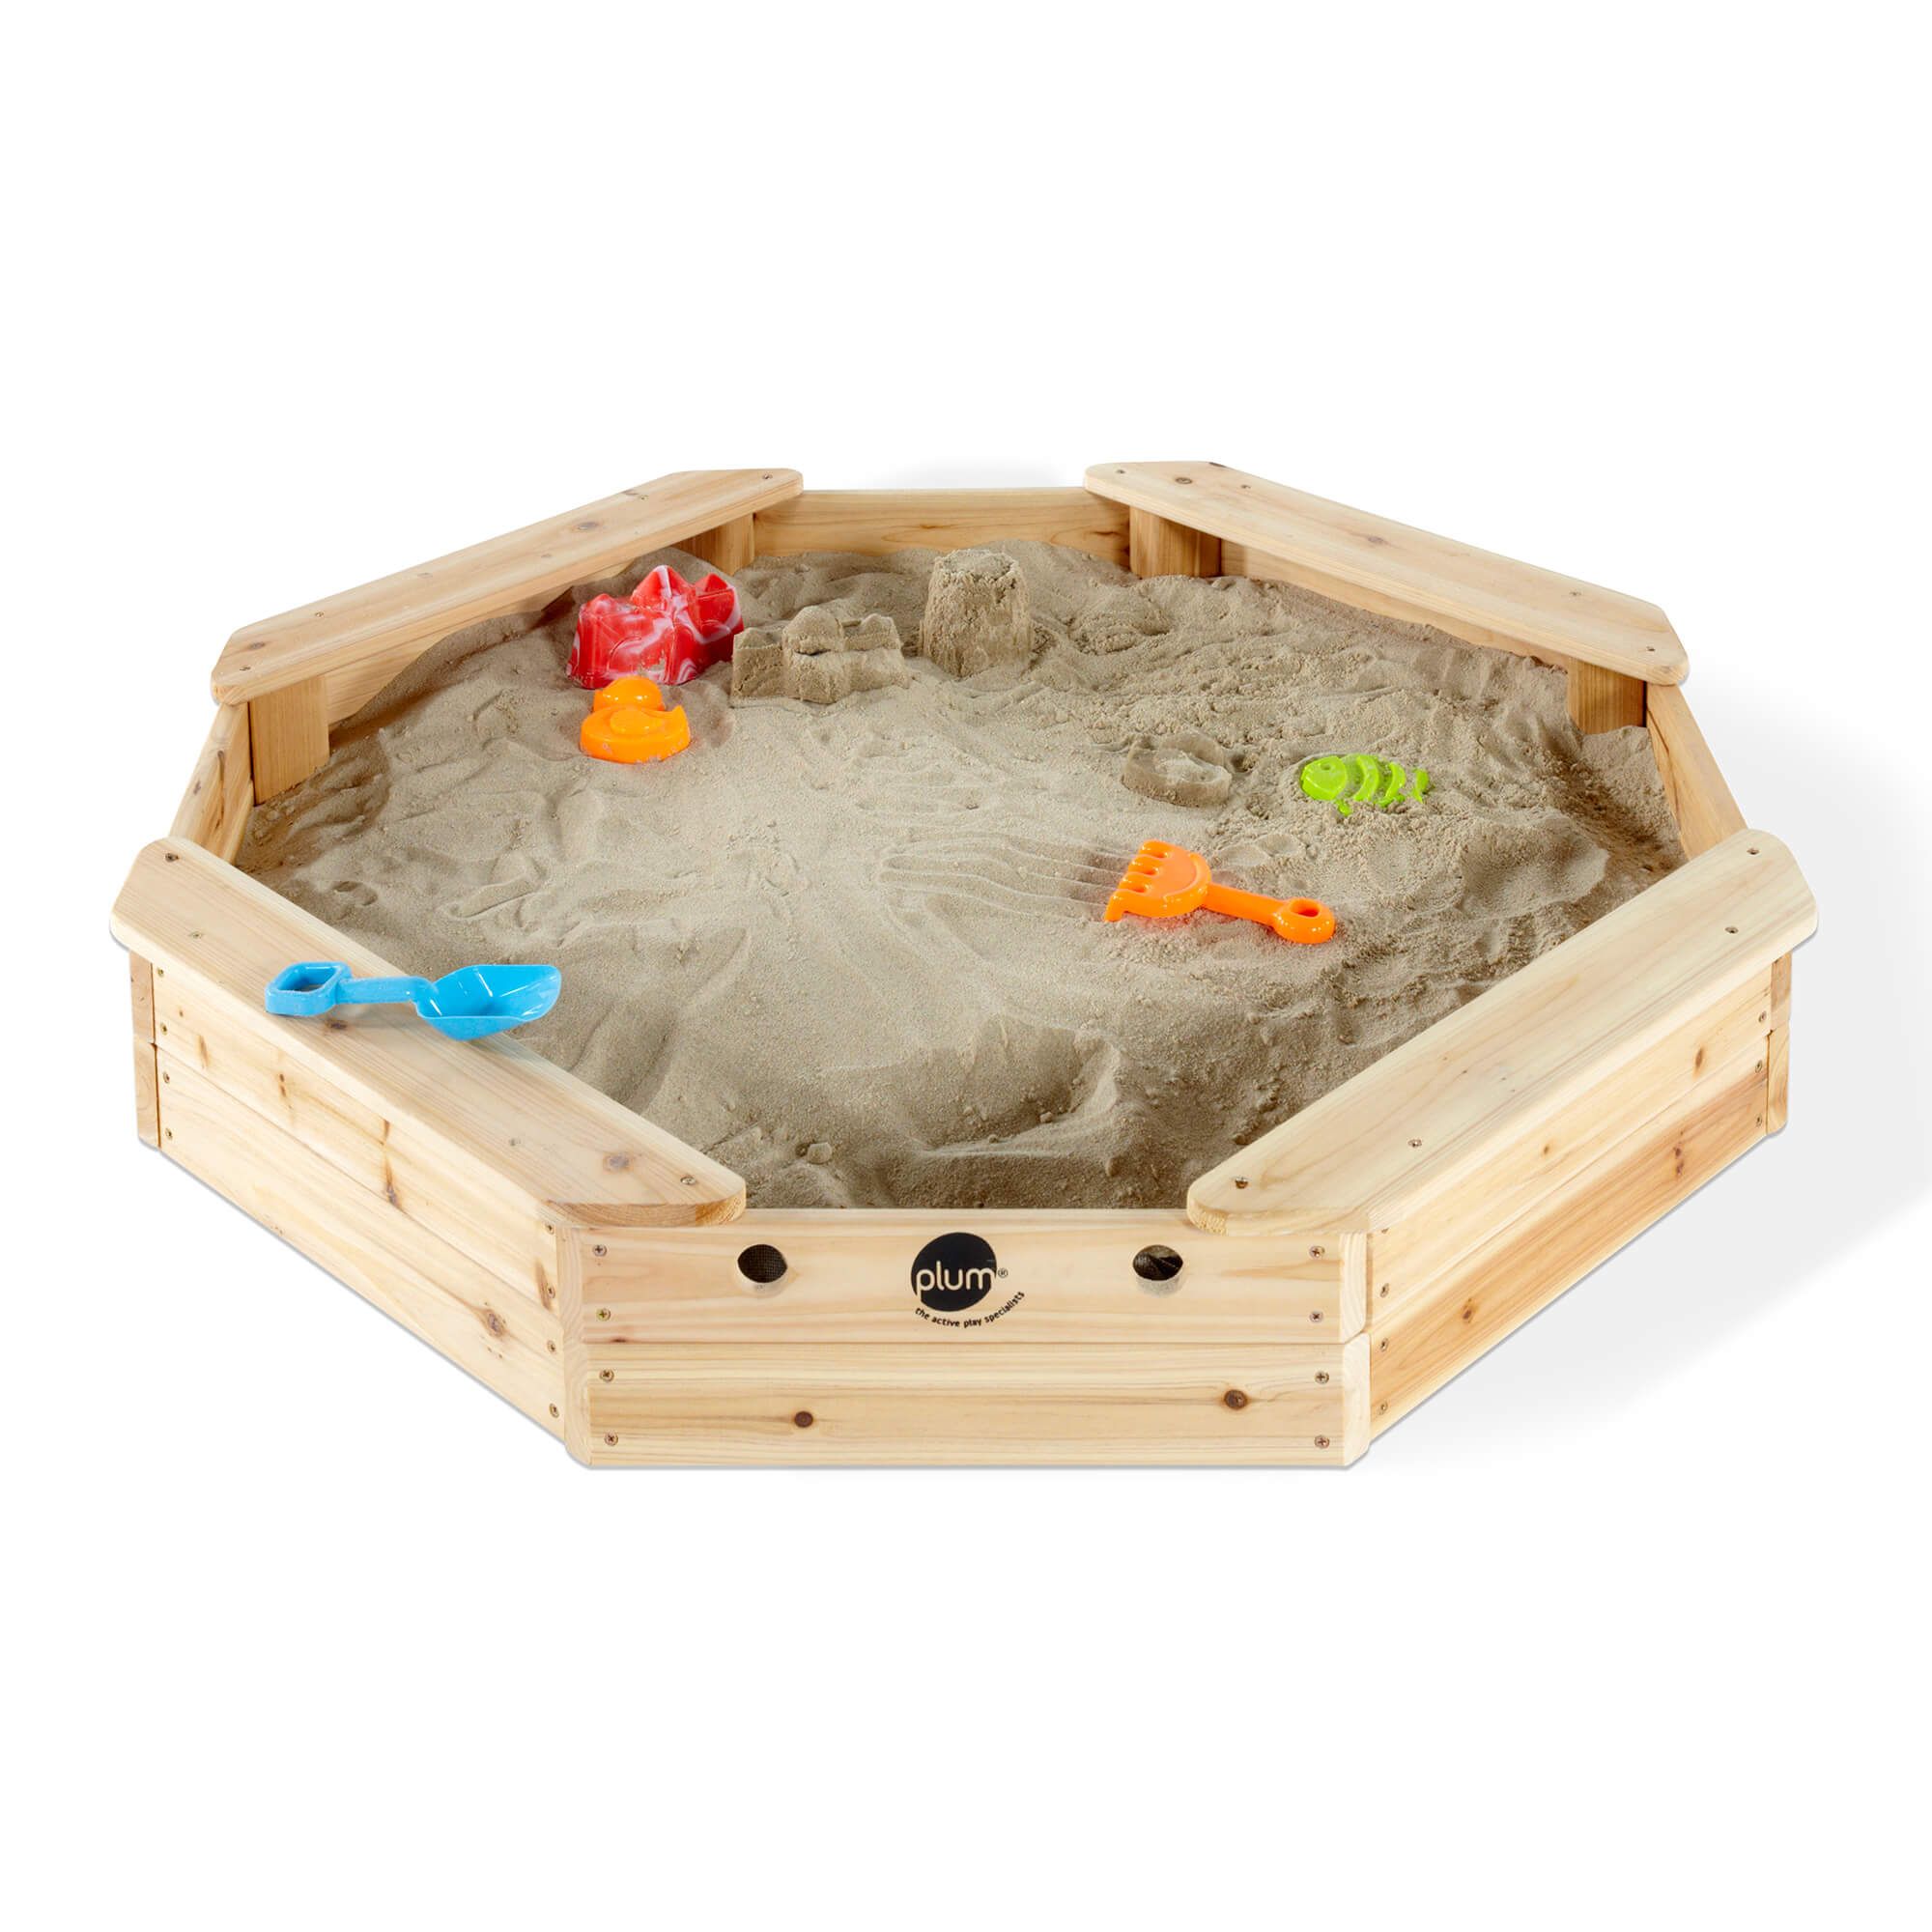 Plum Play Treasure Beach Octagonal Wooden Sandpit w/ Seats & Cover